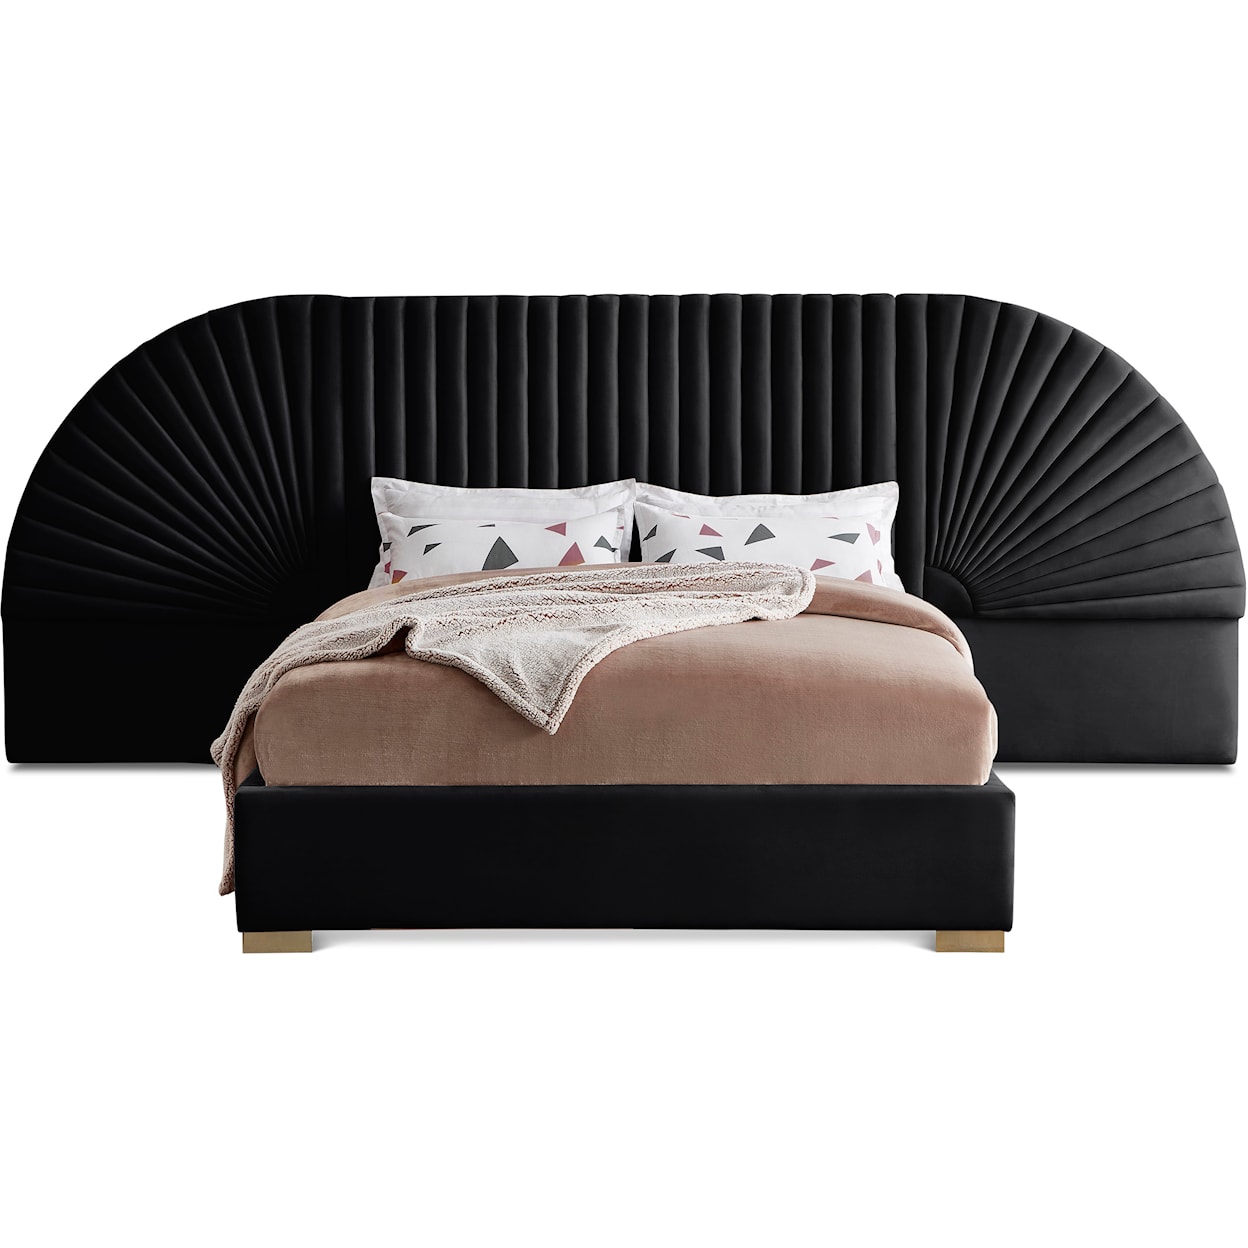 Meridian Furniture Cleo Upholstered Black Velvet Queen Bed